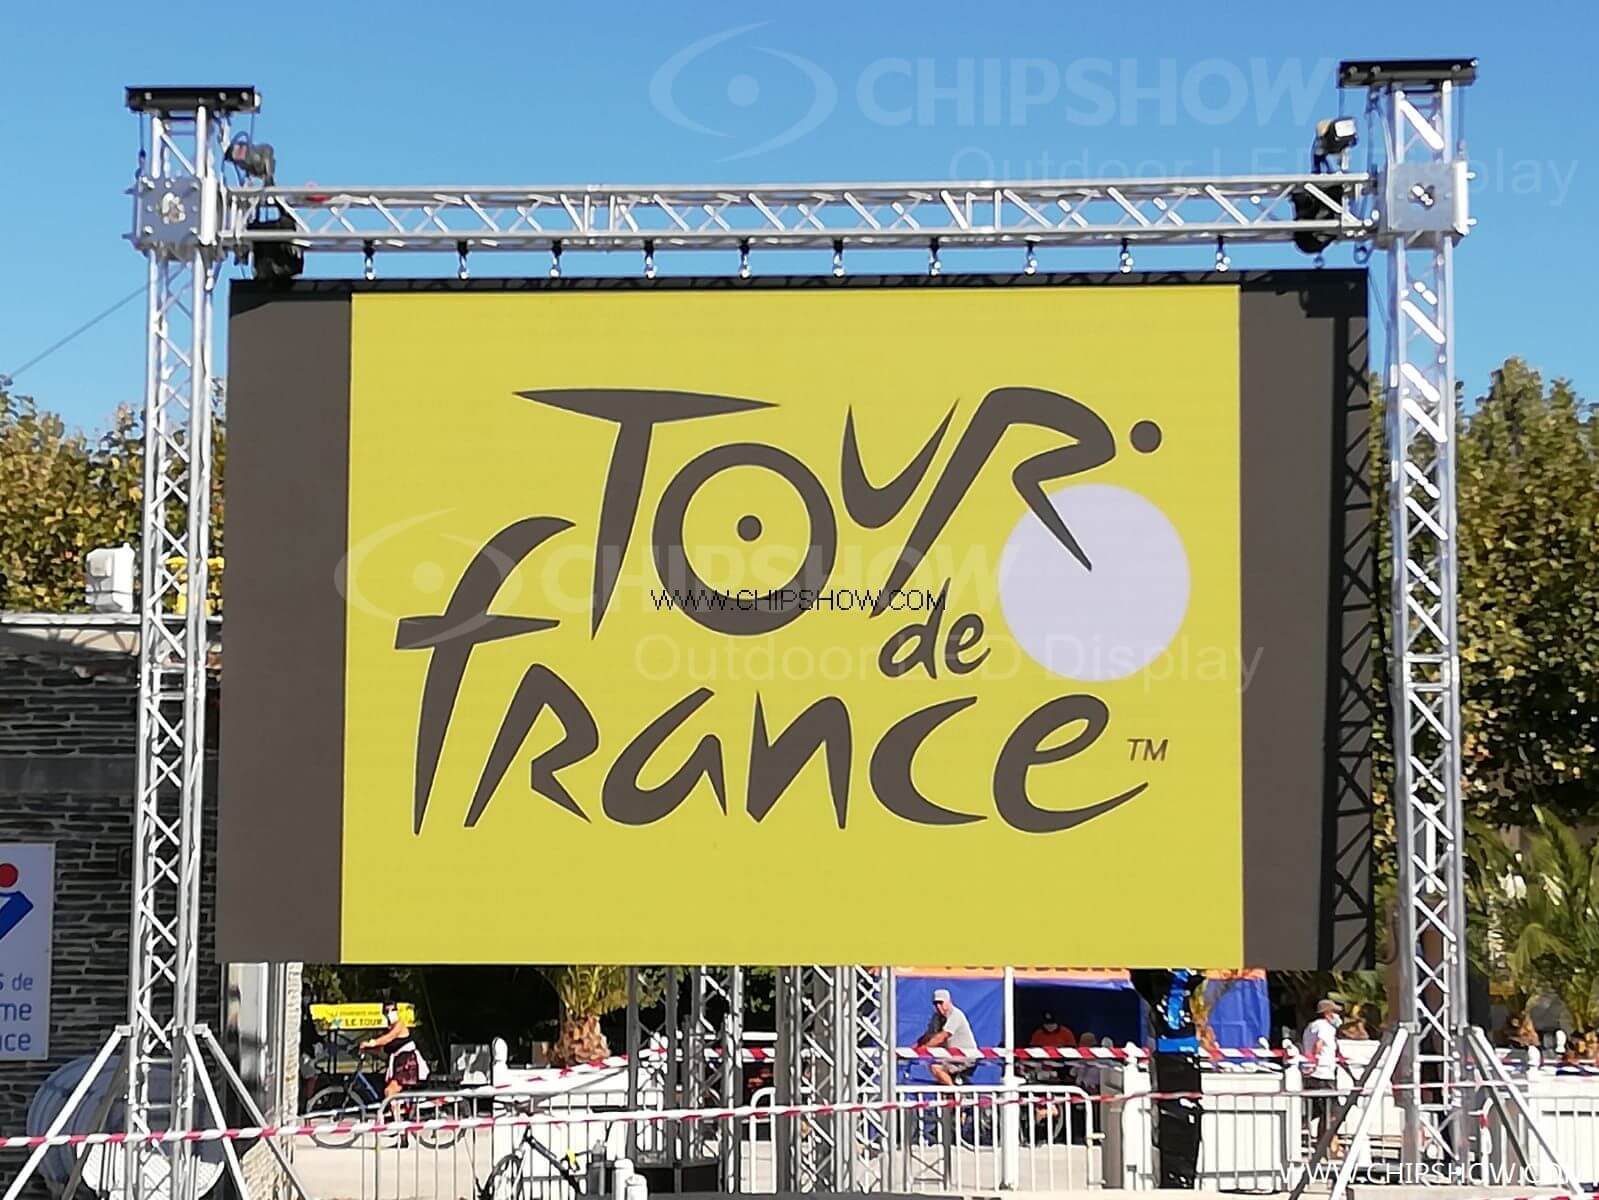 C-Lite-D P3.91 Outdoor LED Screen in the Event of 2020 LE TOUR DE FRANCE